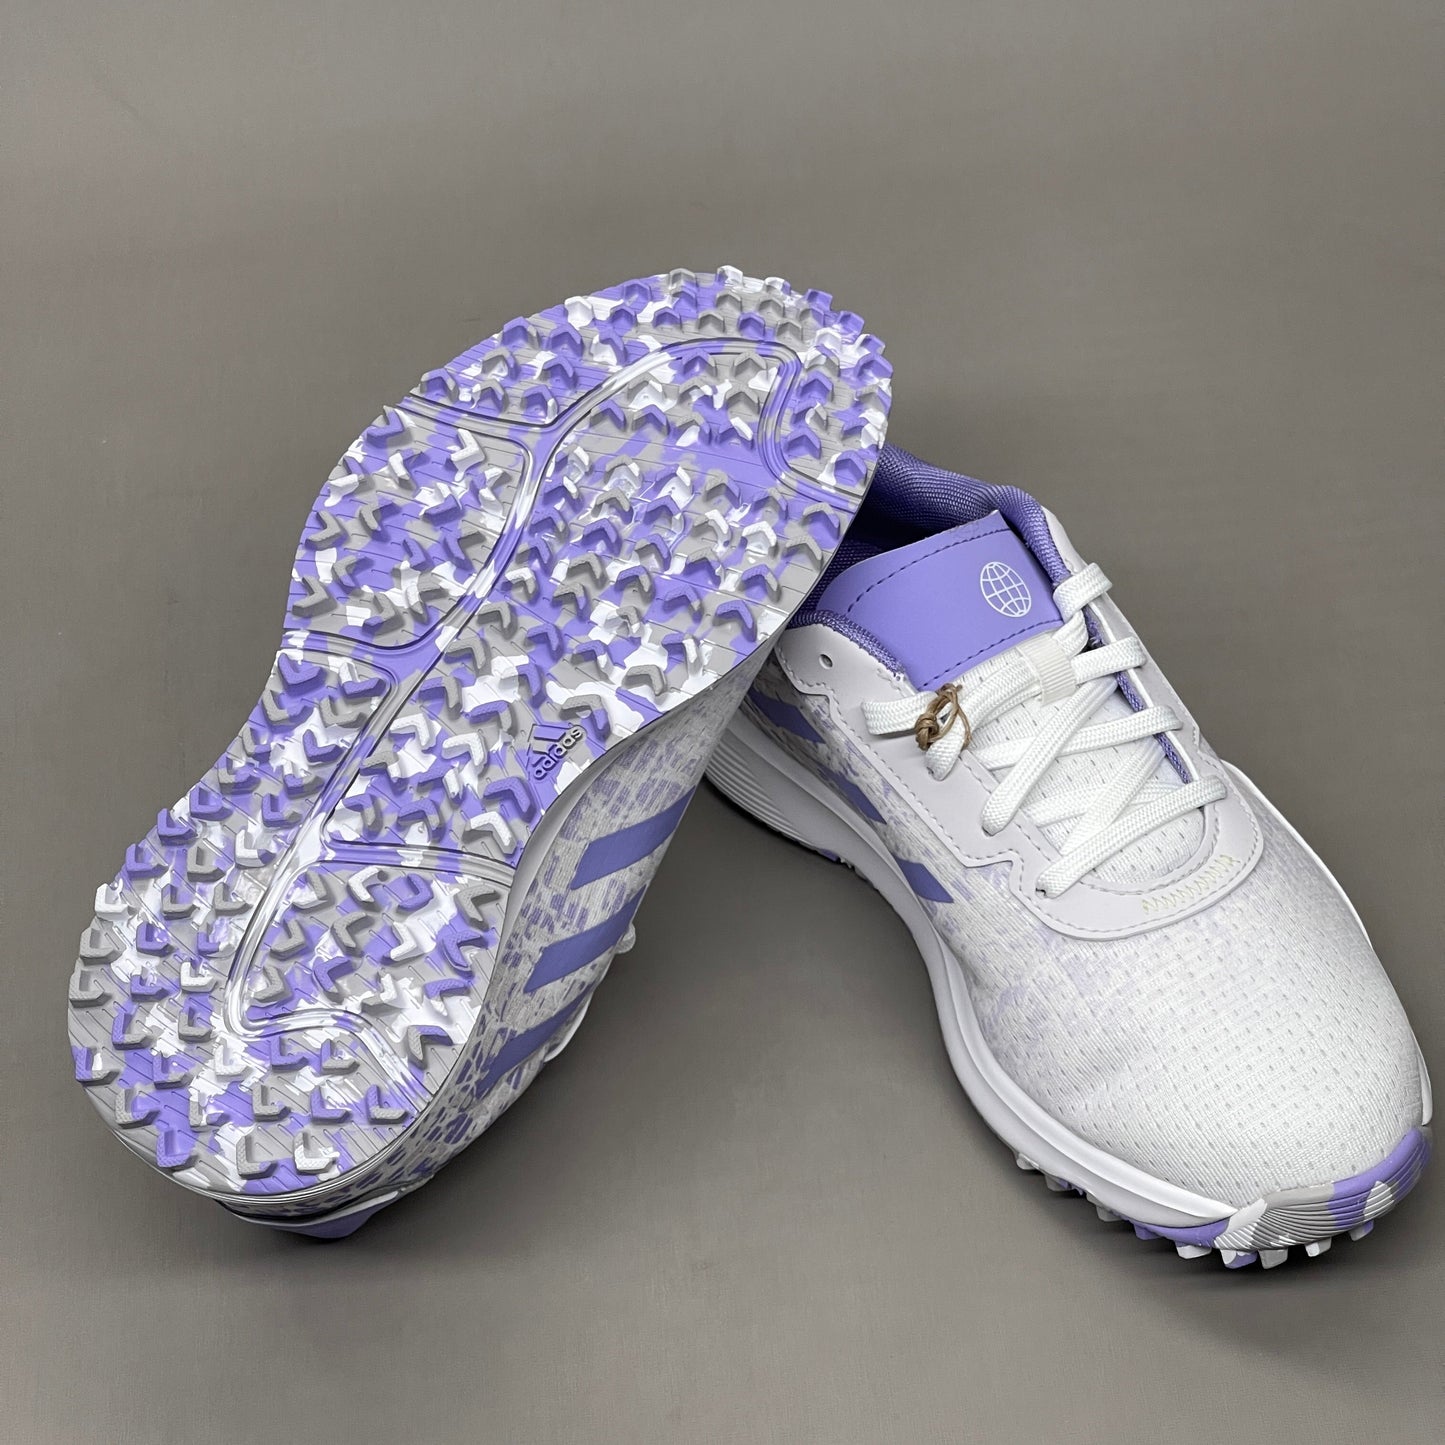 ADIDAS Golf Shoes JR S2G SL Waterproof Youth Sz 4 White / Lime / Purple GV9787 (New)